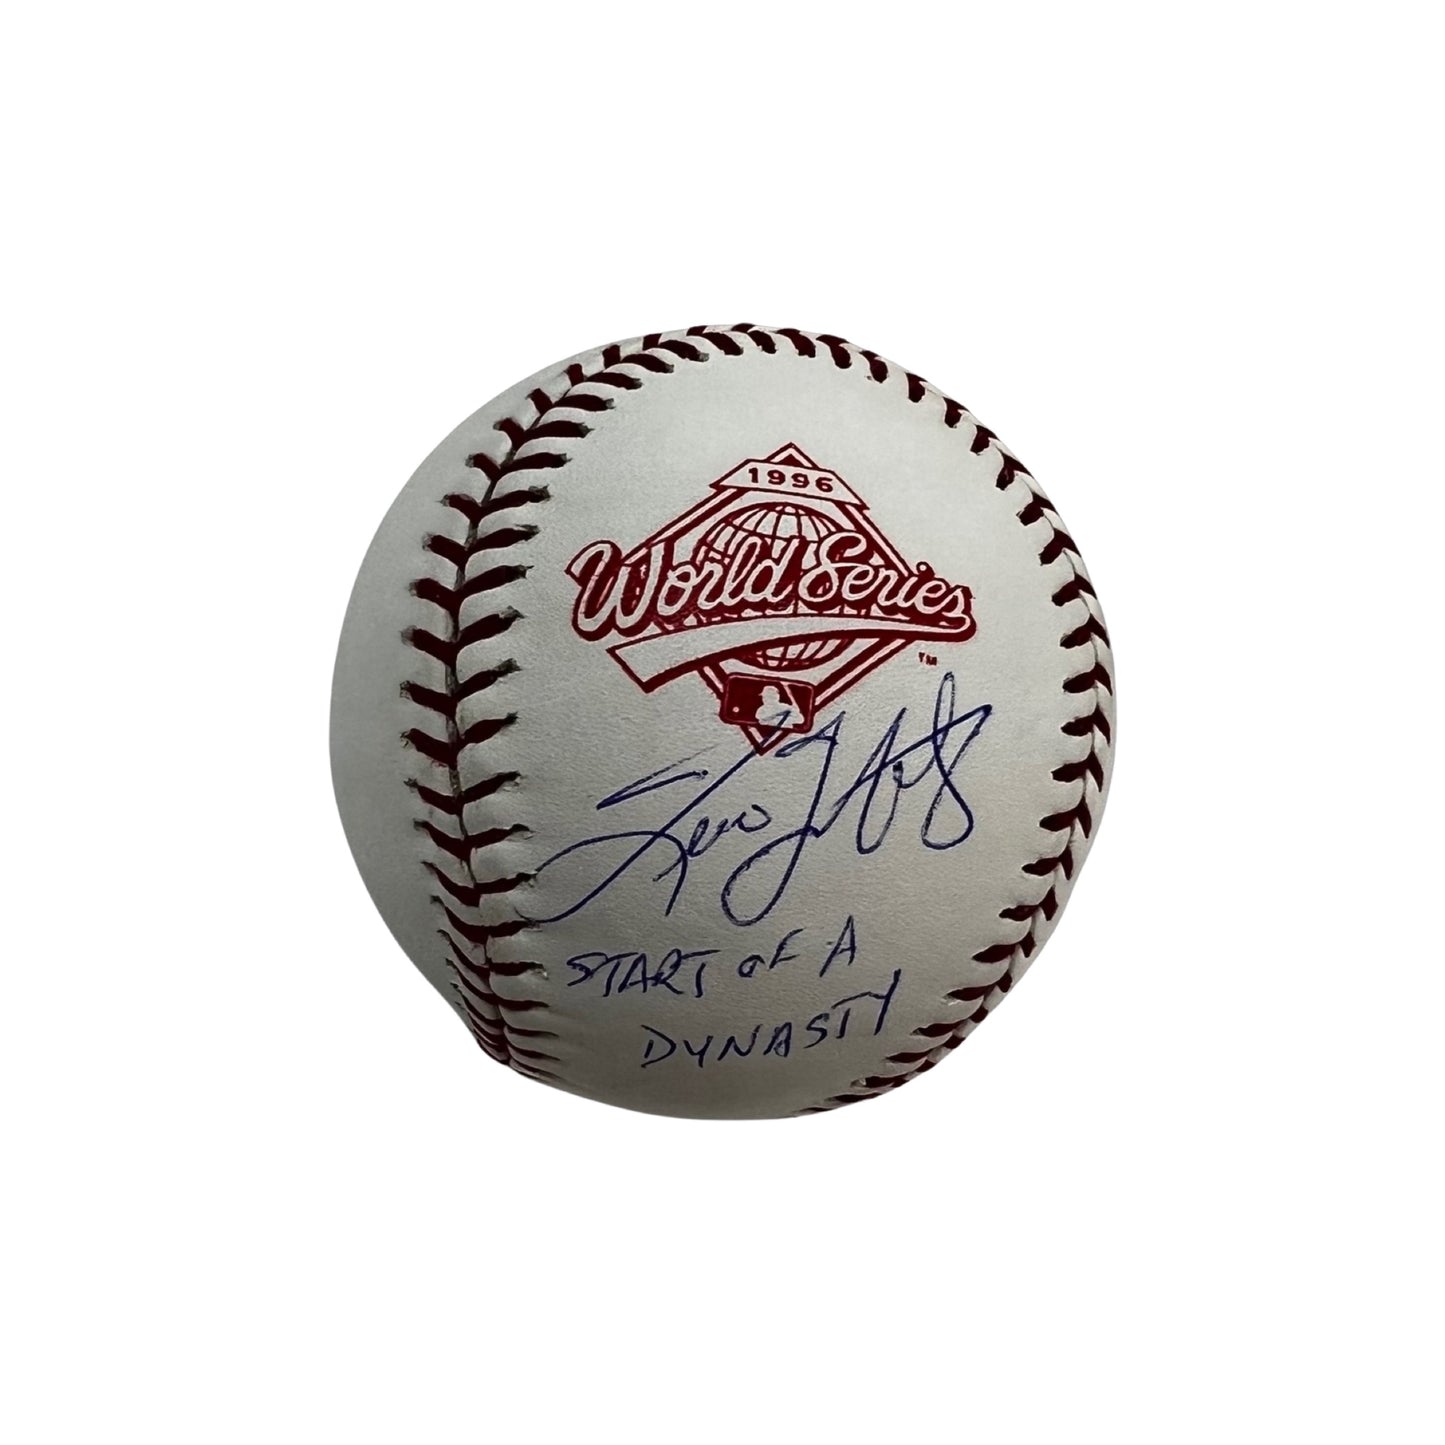 Tino Martinez Autographed New York Yankees 1996 World Series Logo Baseball “Start of a Dynasty” Inscription PSA